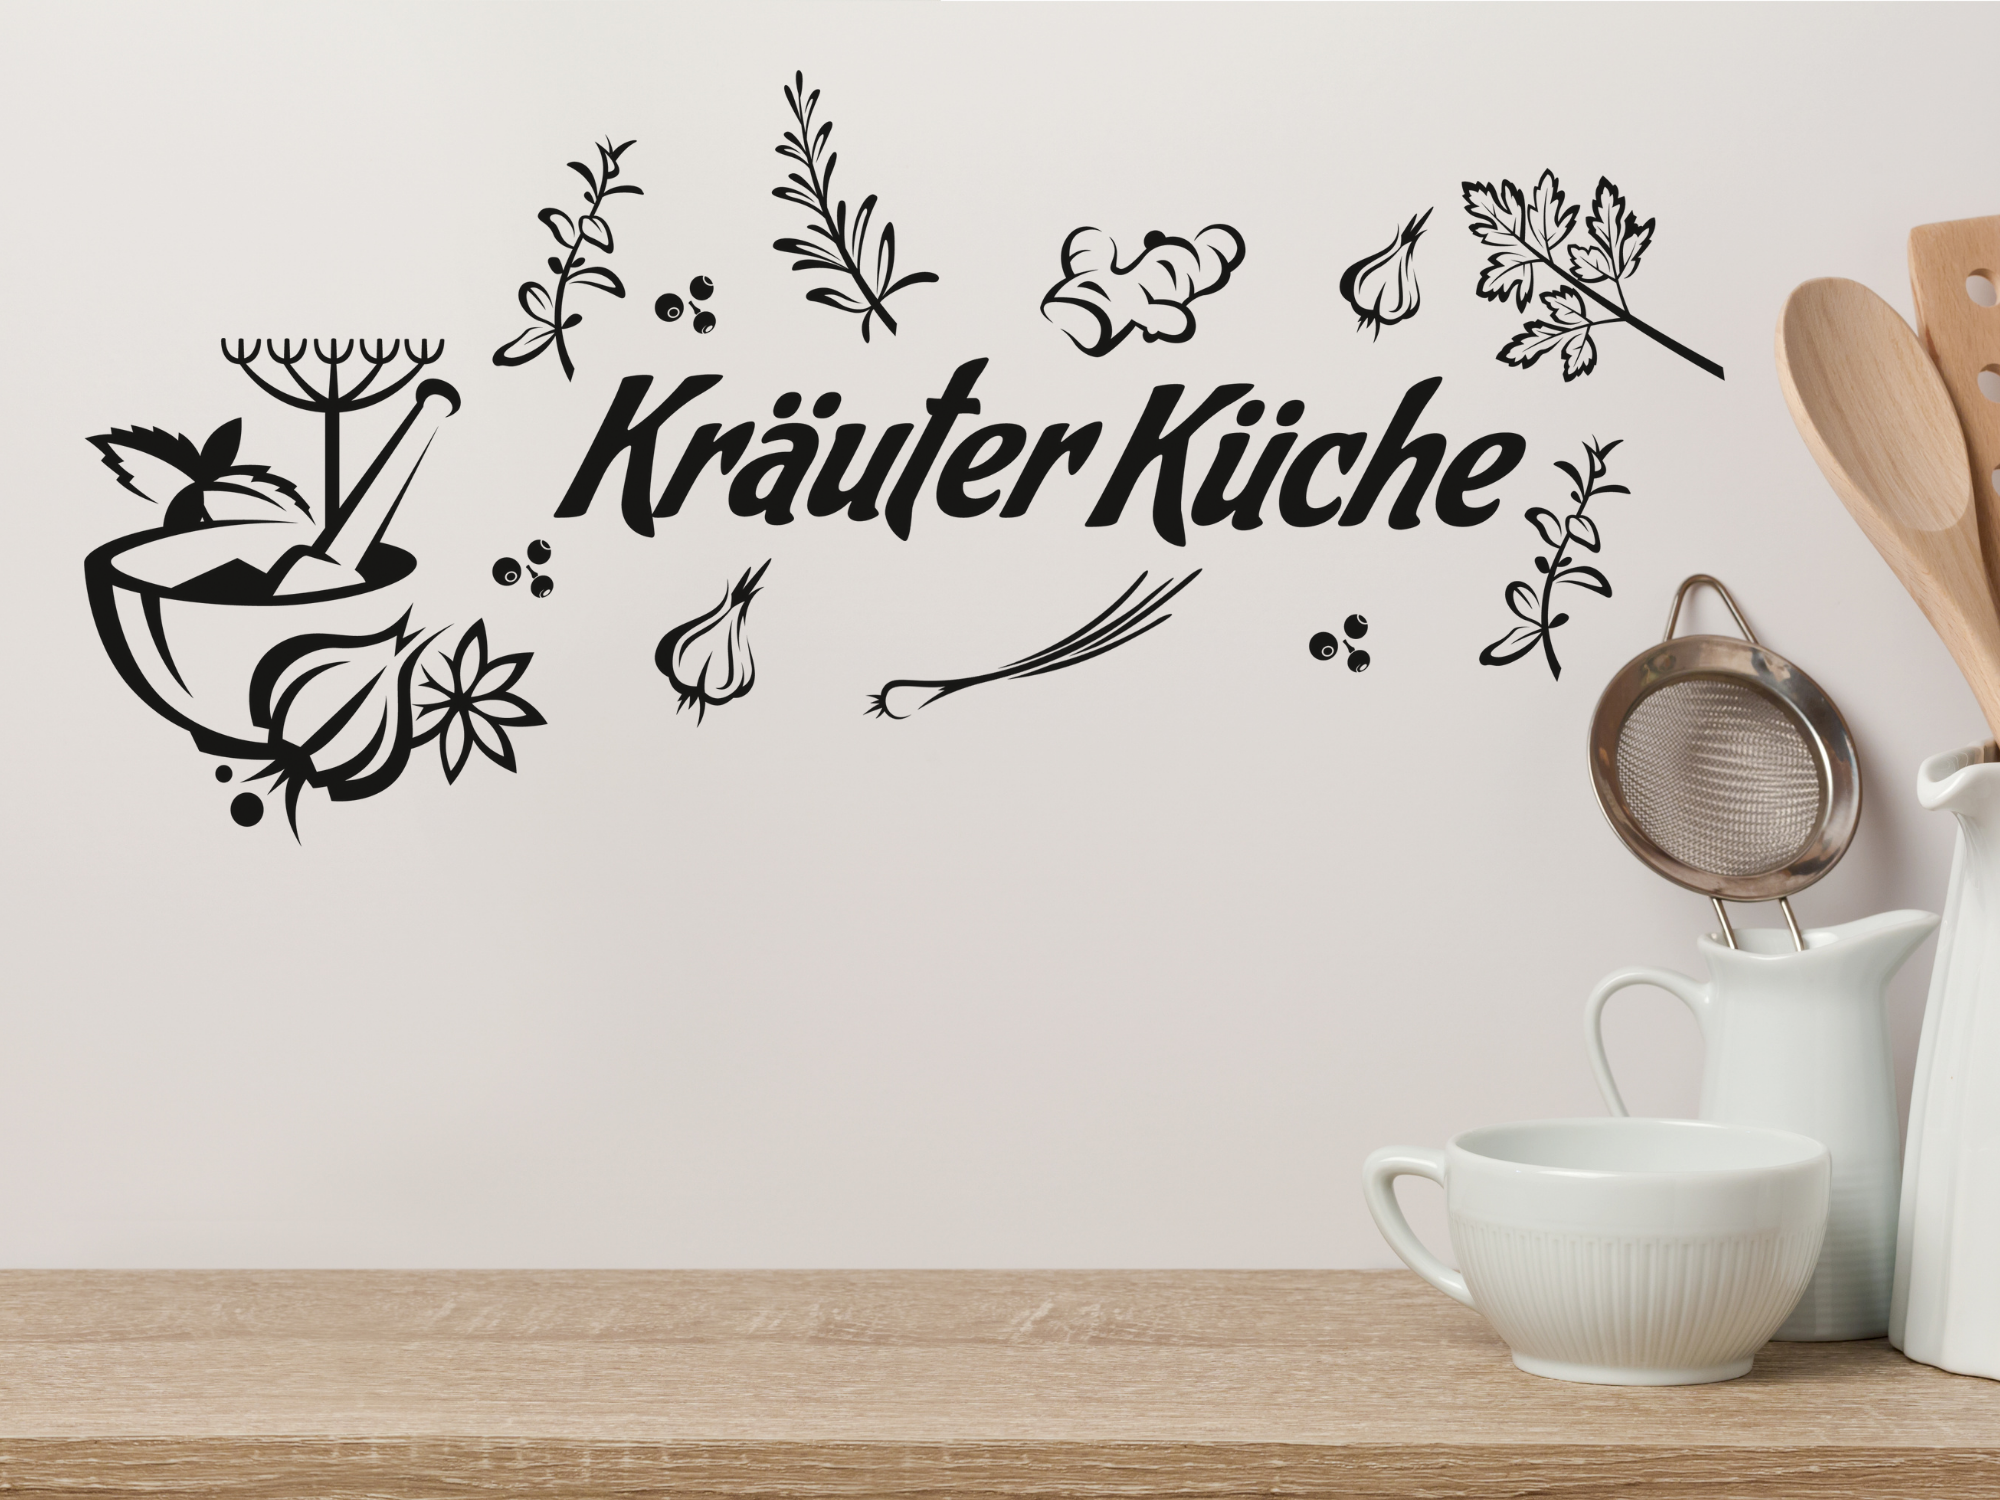 Wandtattoo Küche Set Kräuter | Kräuter und Gewürze | Küche | Wandtattoo |  Graz-Design